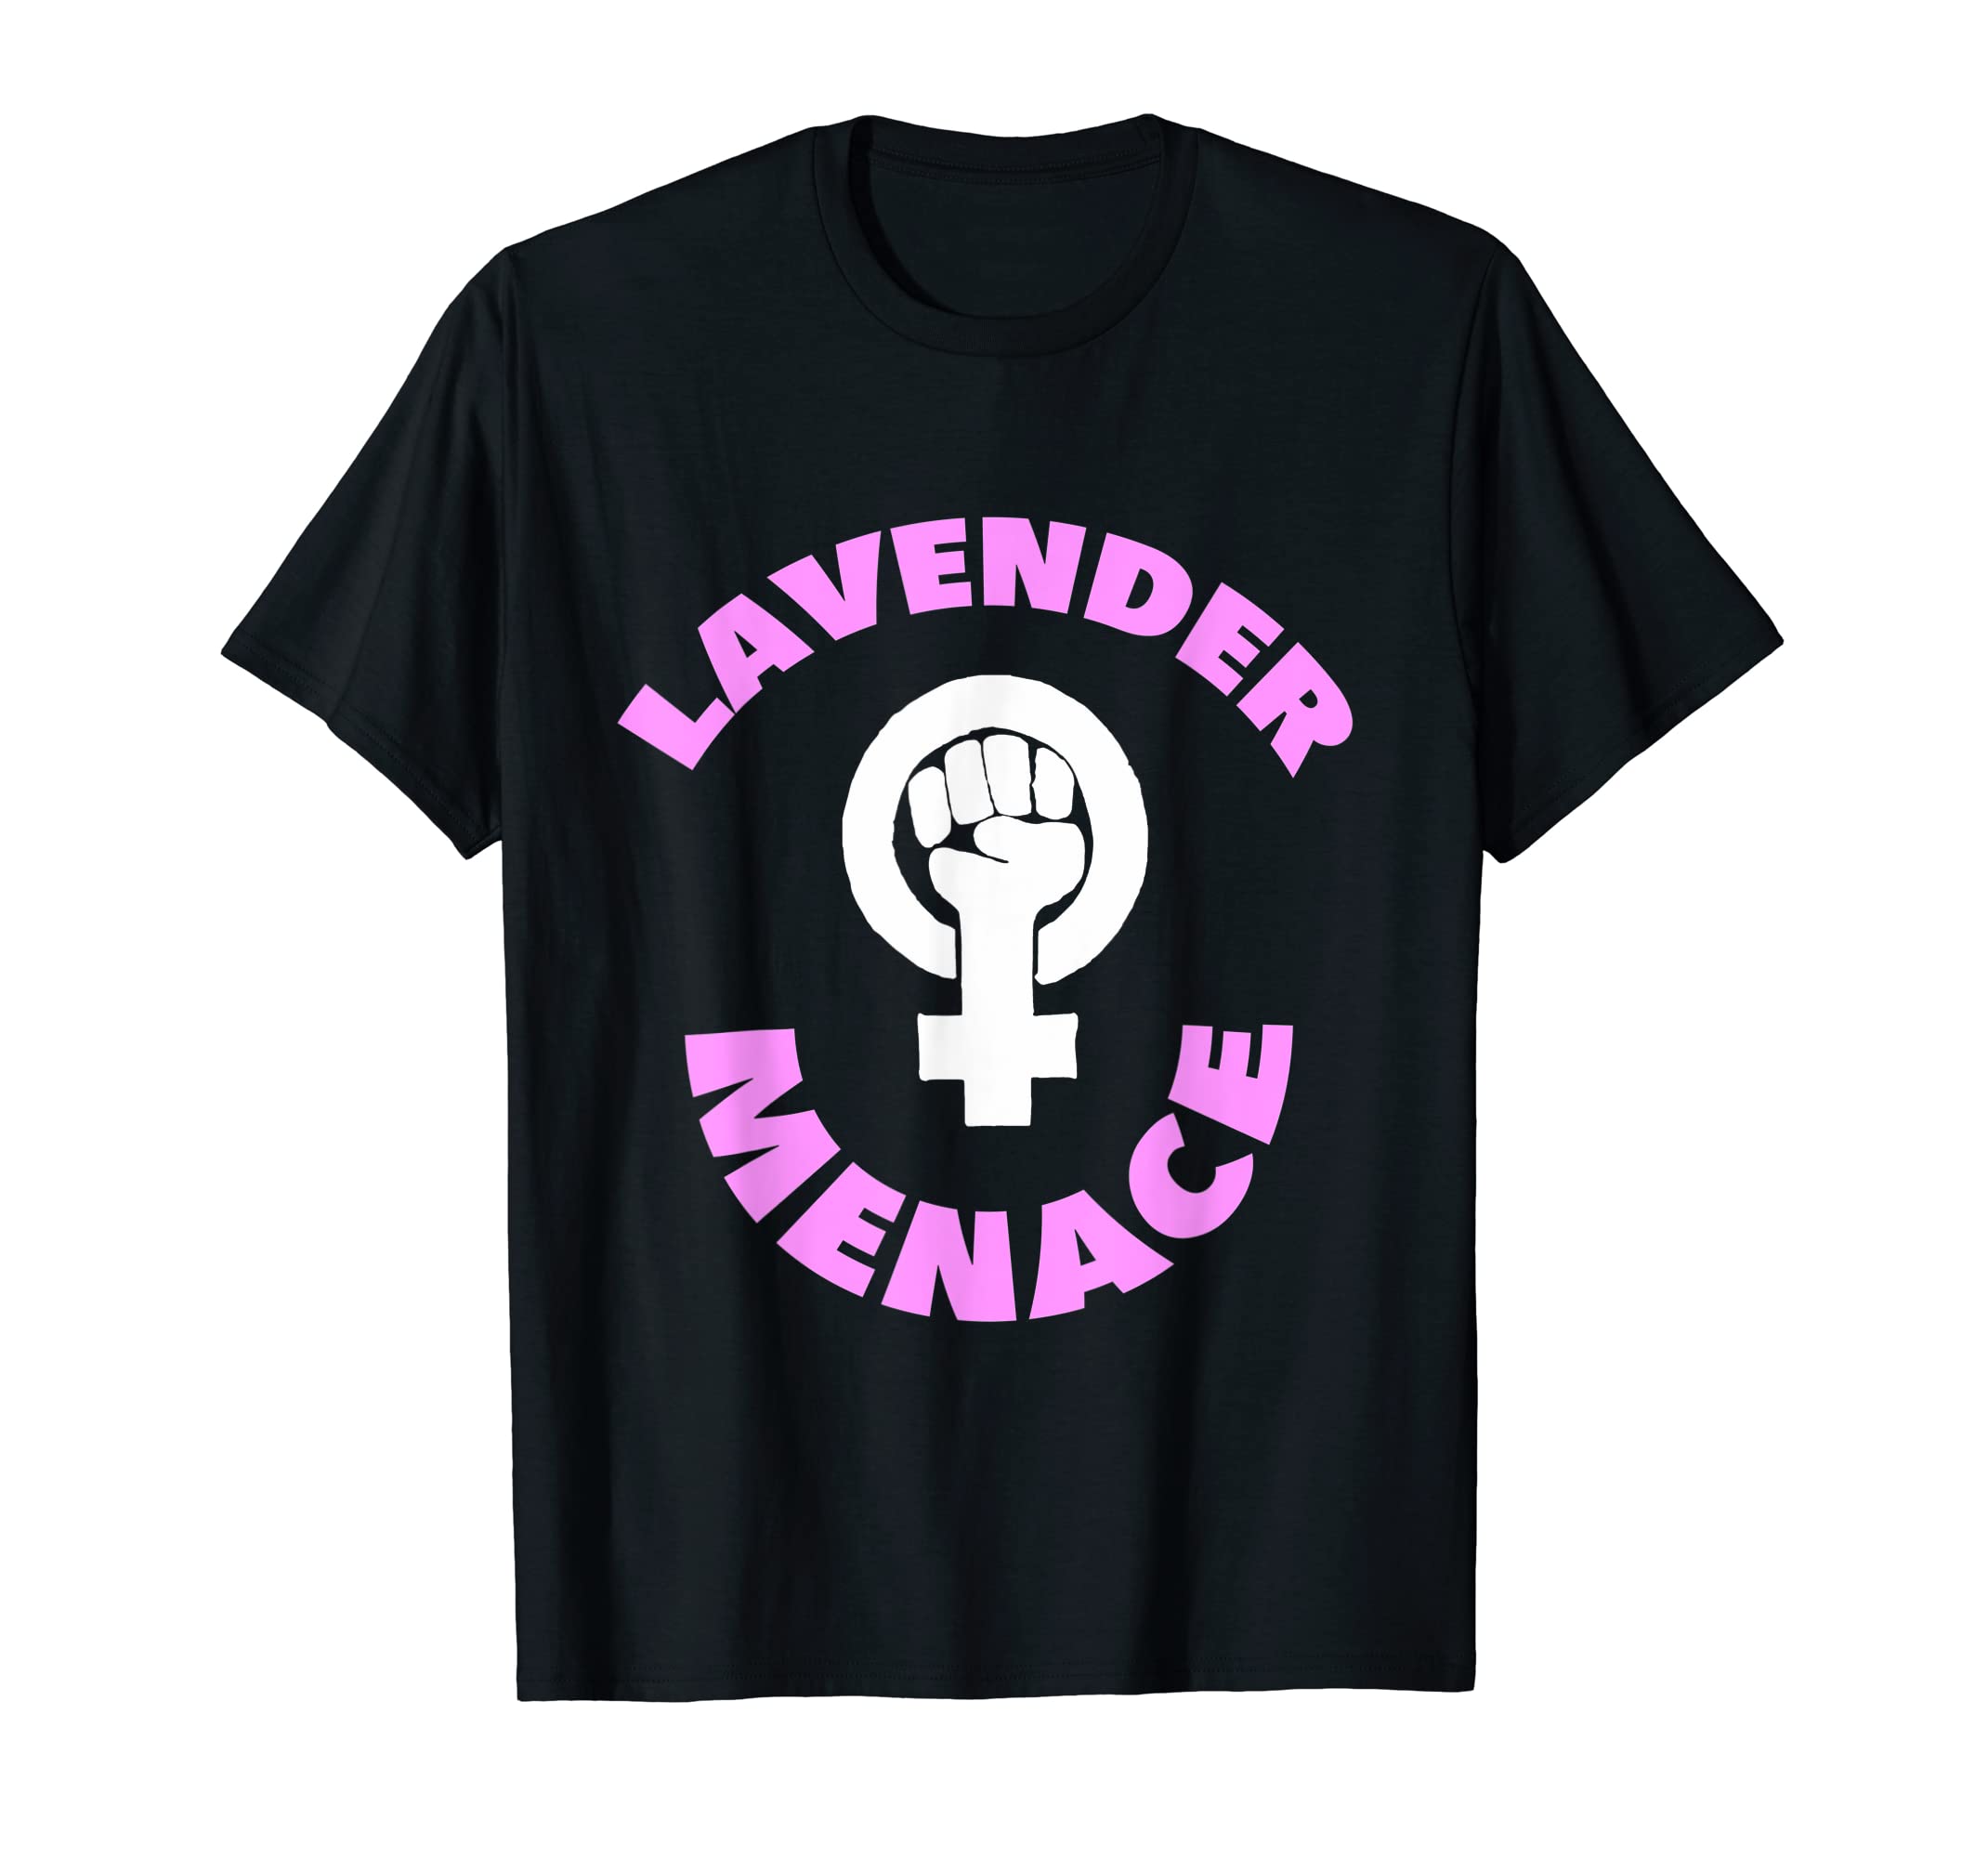 Lavender Menace Lesbian Lgbt Radfem Unisex Black Tee Shirt S-6XL